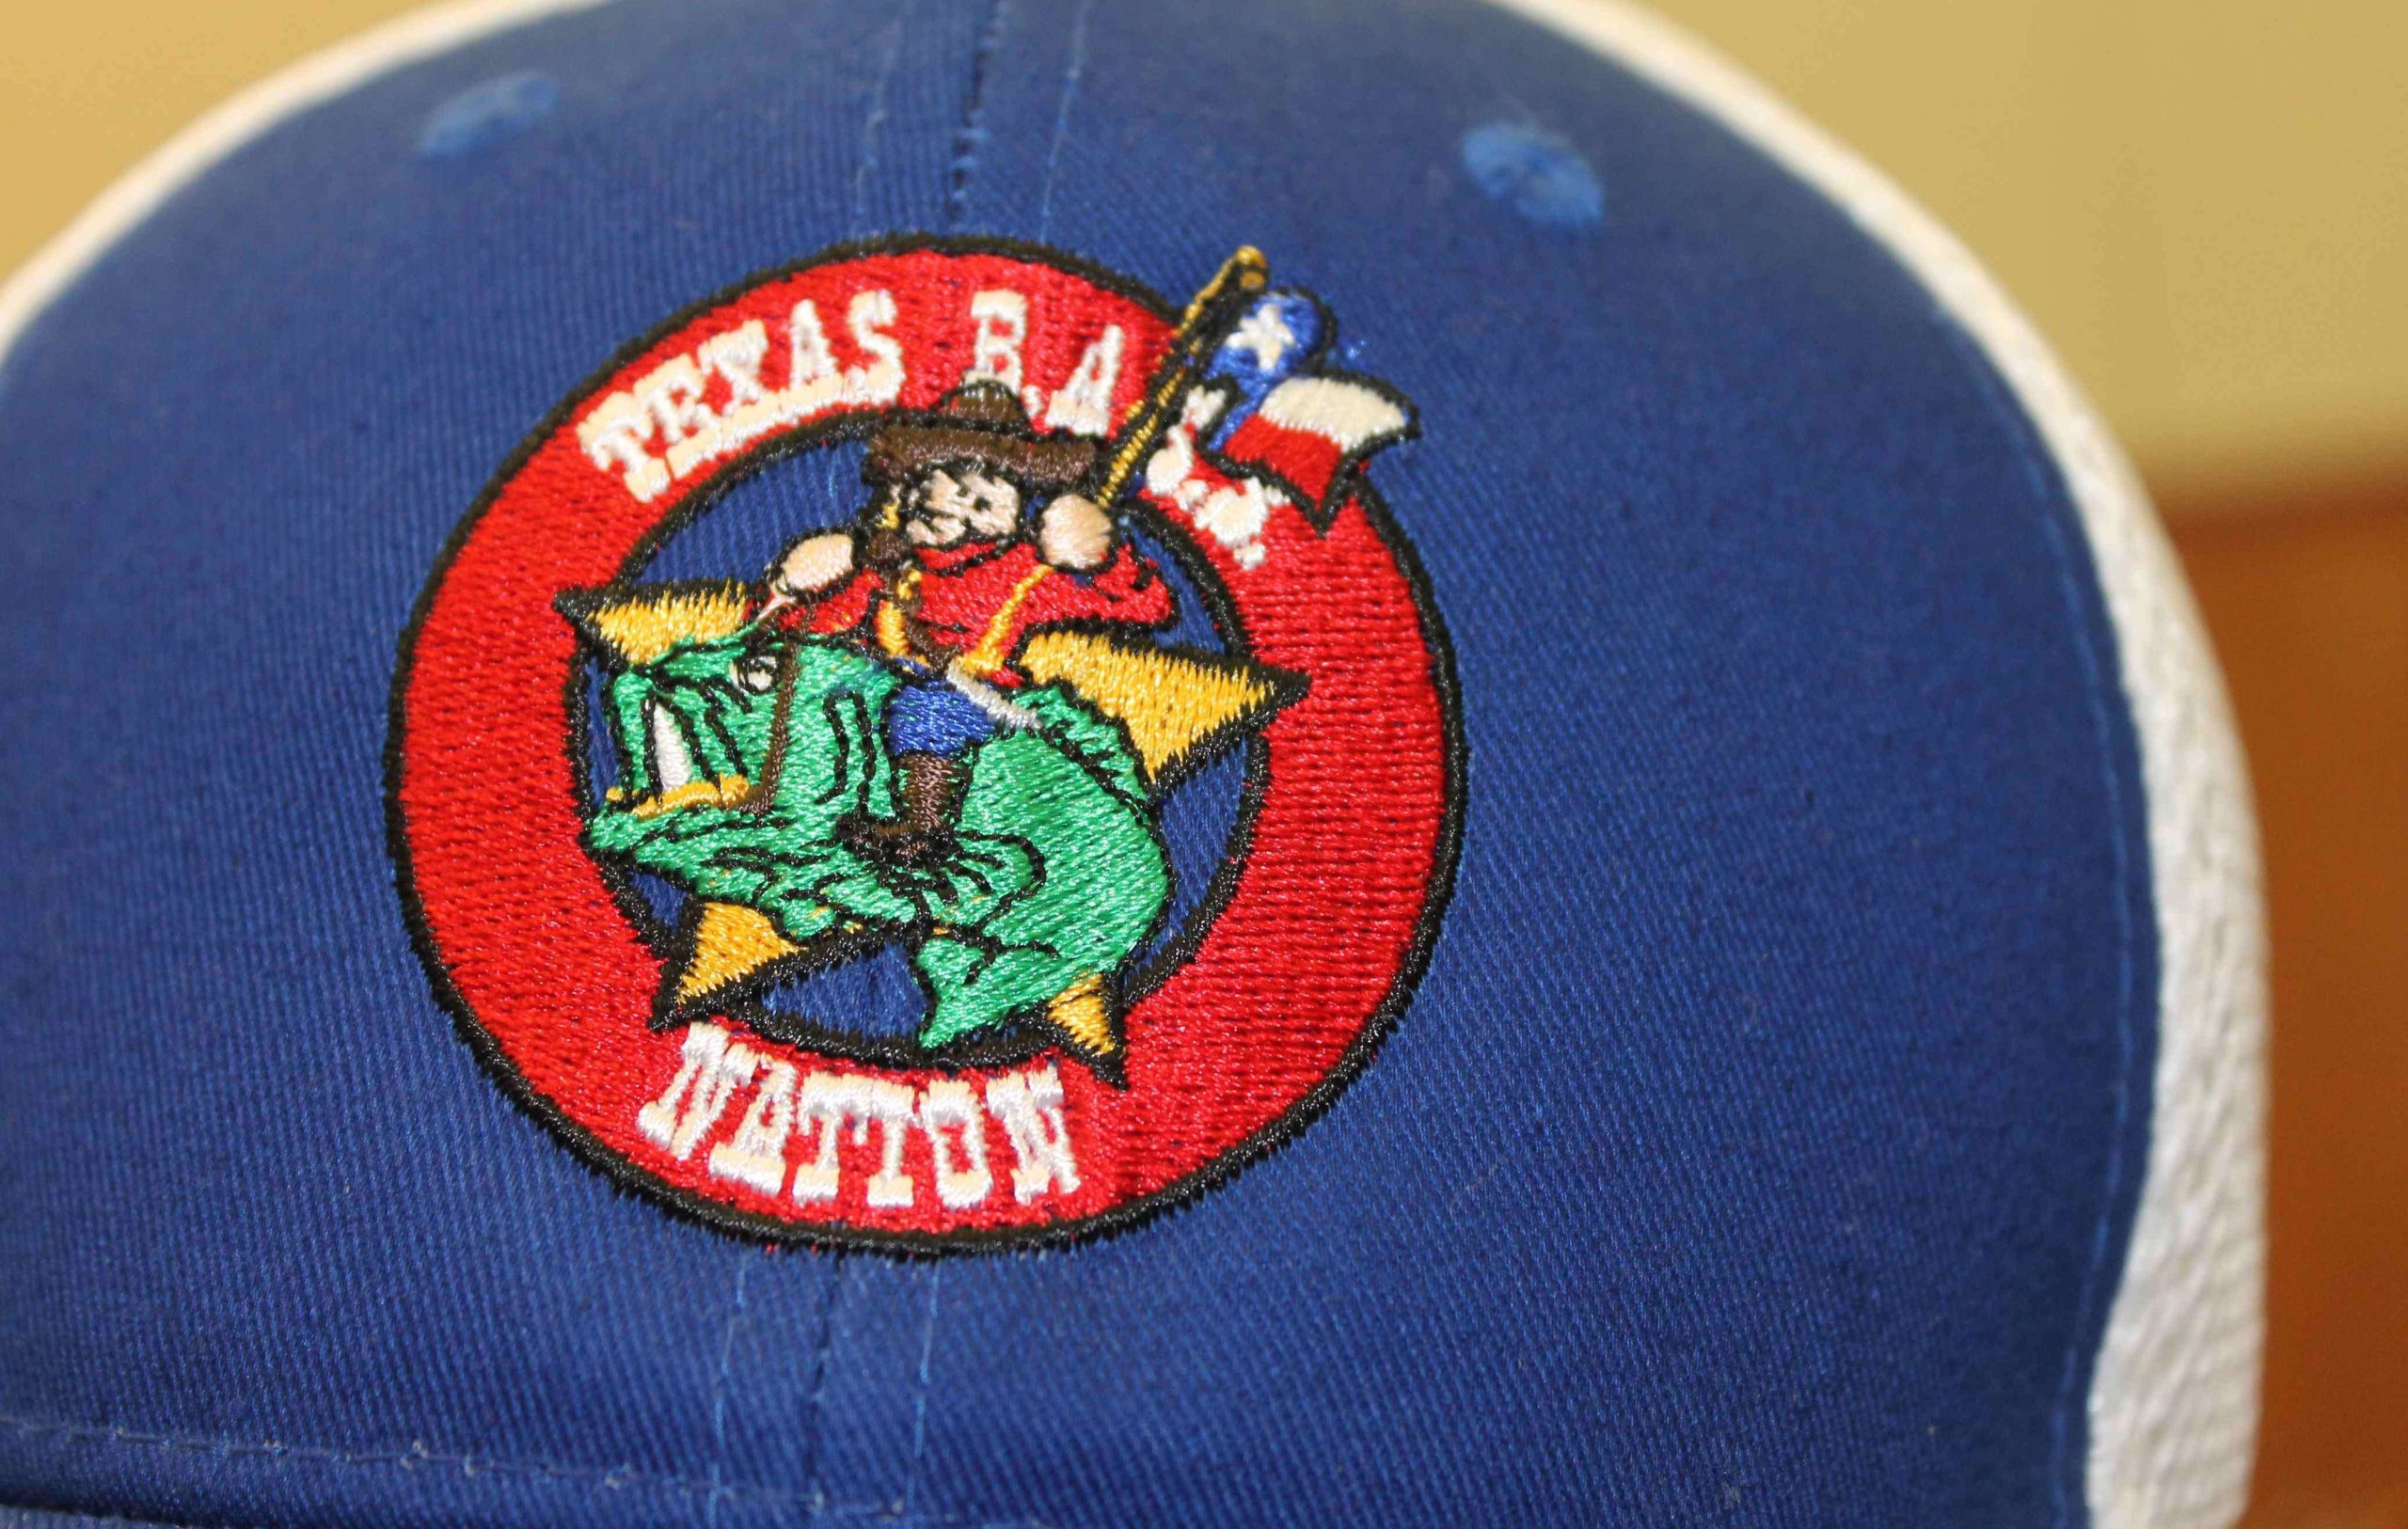 Save a horse ride a â¦ bass? Texas B.A.S.S. Nation anglers sported ball caps with this patch embroidered on the front.
